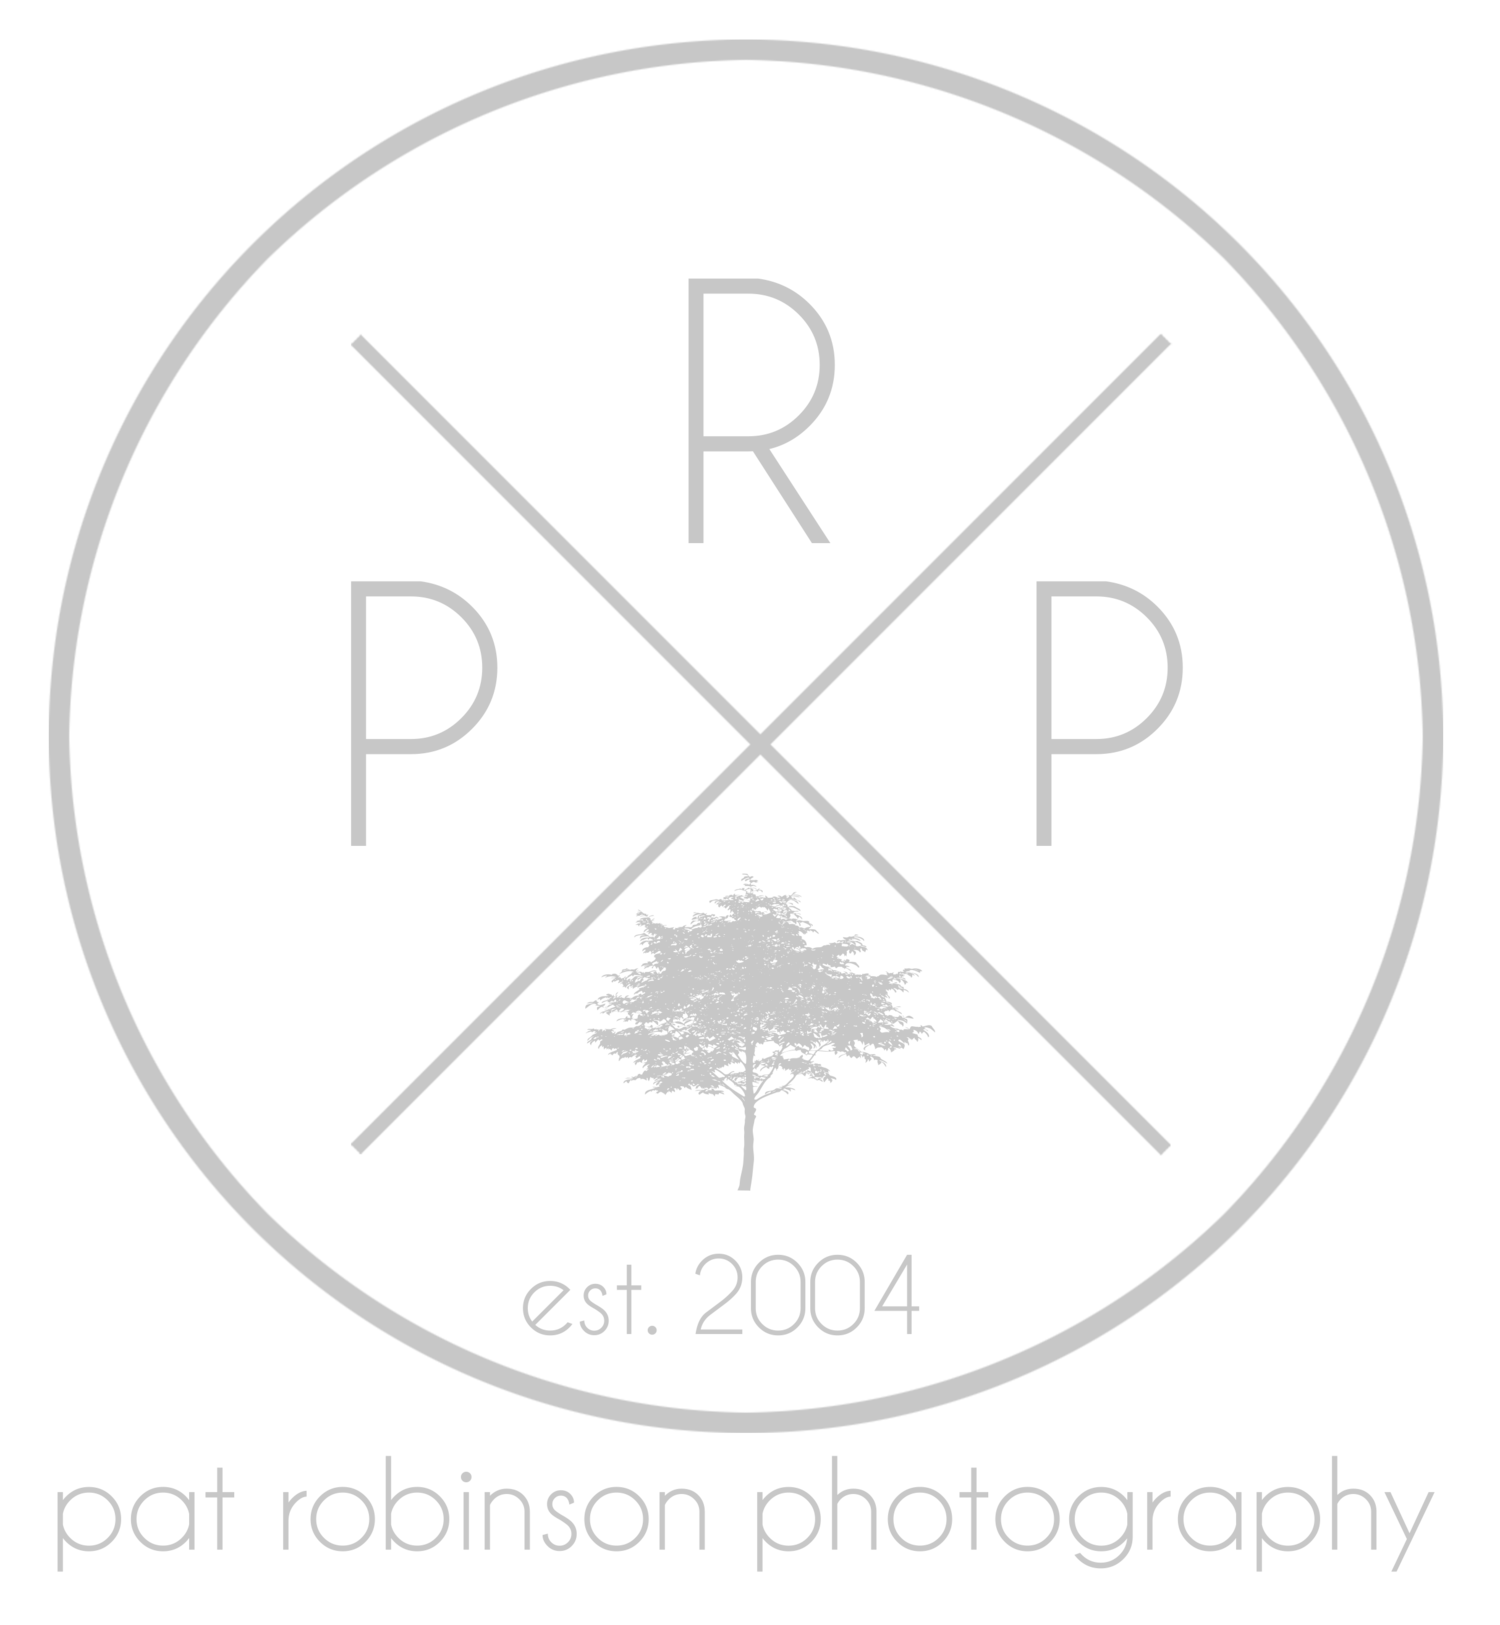 Pat Robinson Photography